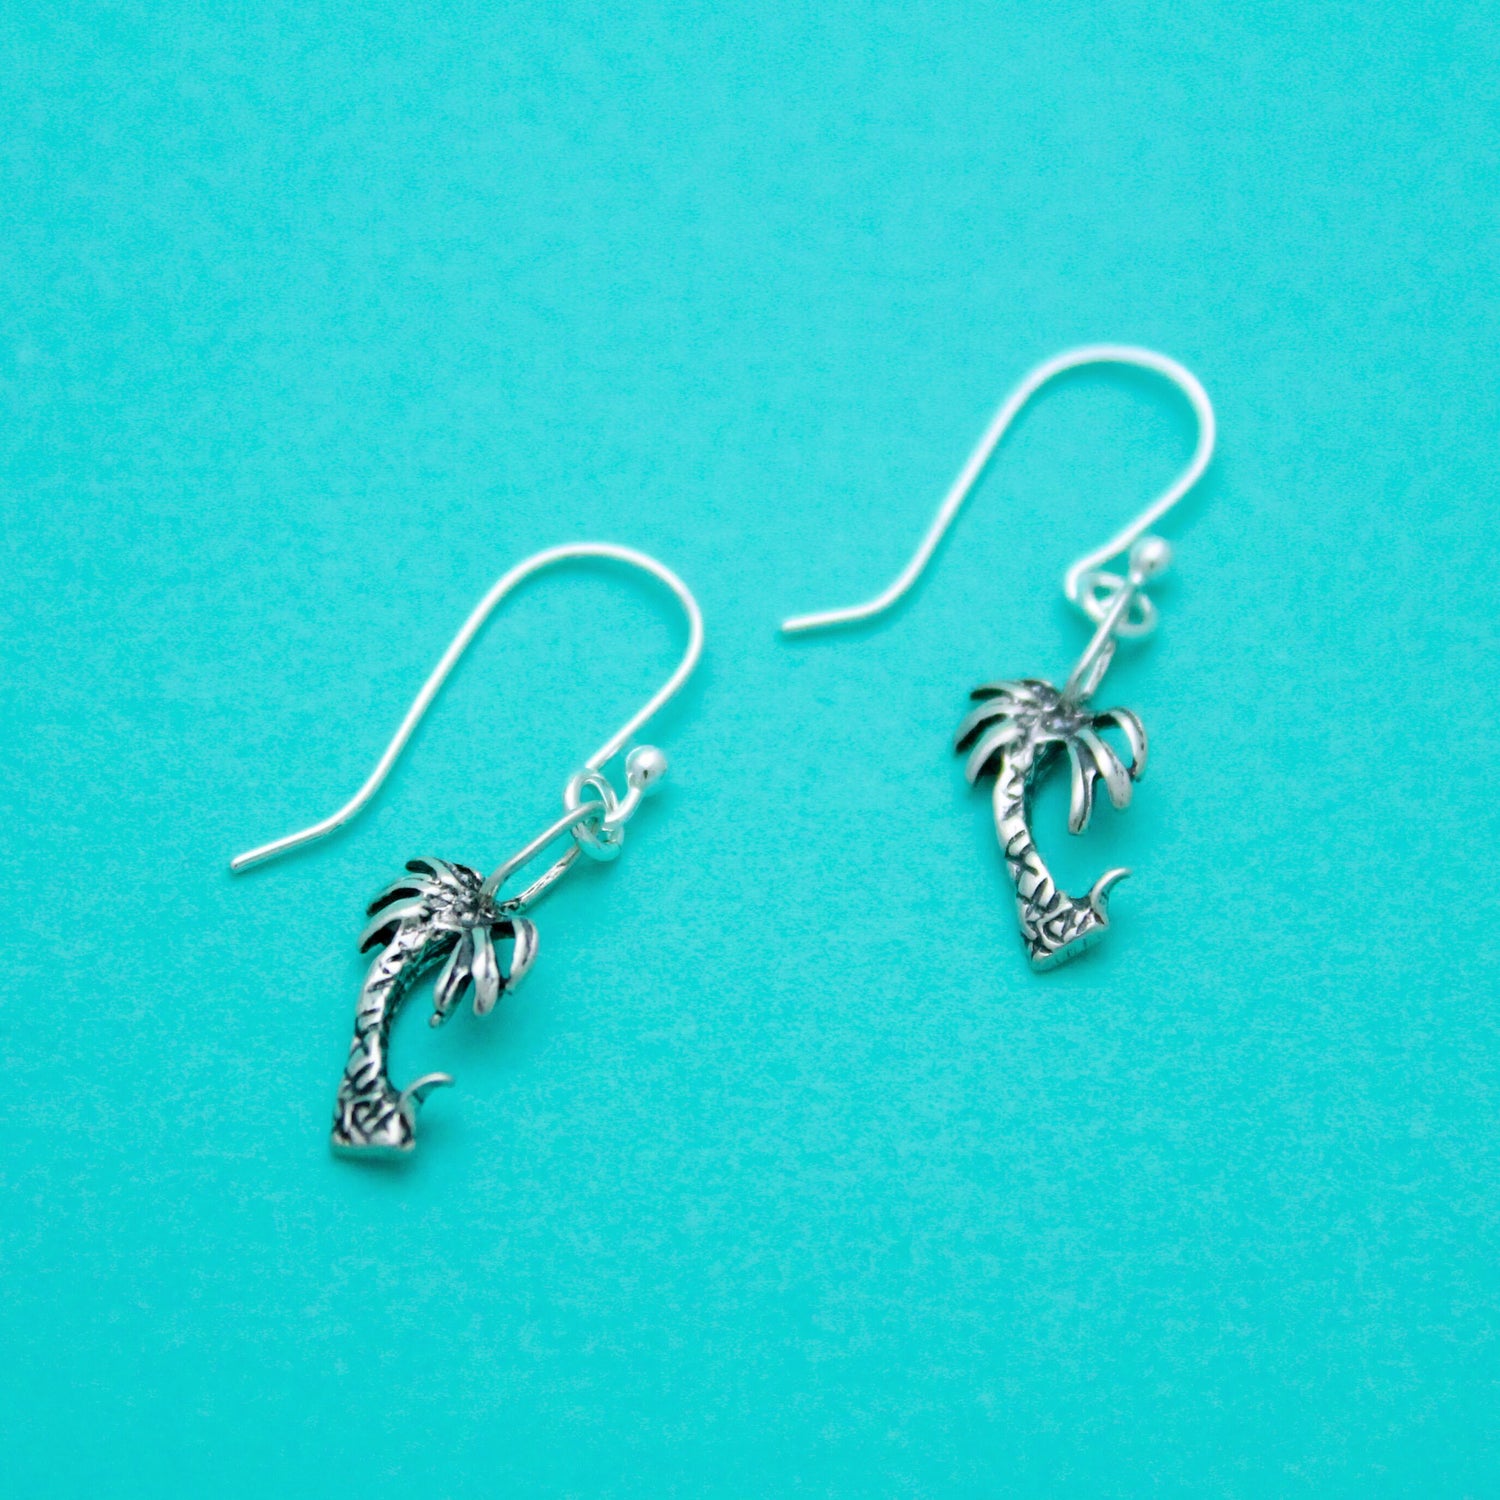 Cute Palm Tree Earrings, Tropical Beach Jewelry, Sterling Silver Palm Tree Earrings, Palm Tree Jewelry, Sterling Silver Palm Tree Earrings